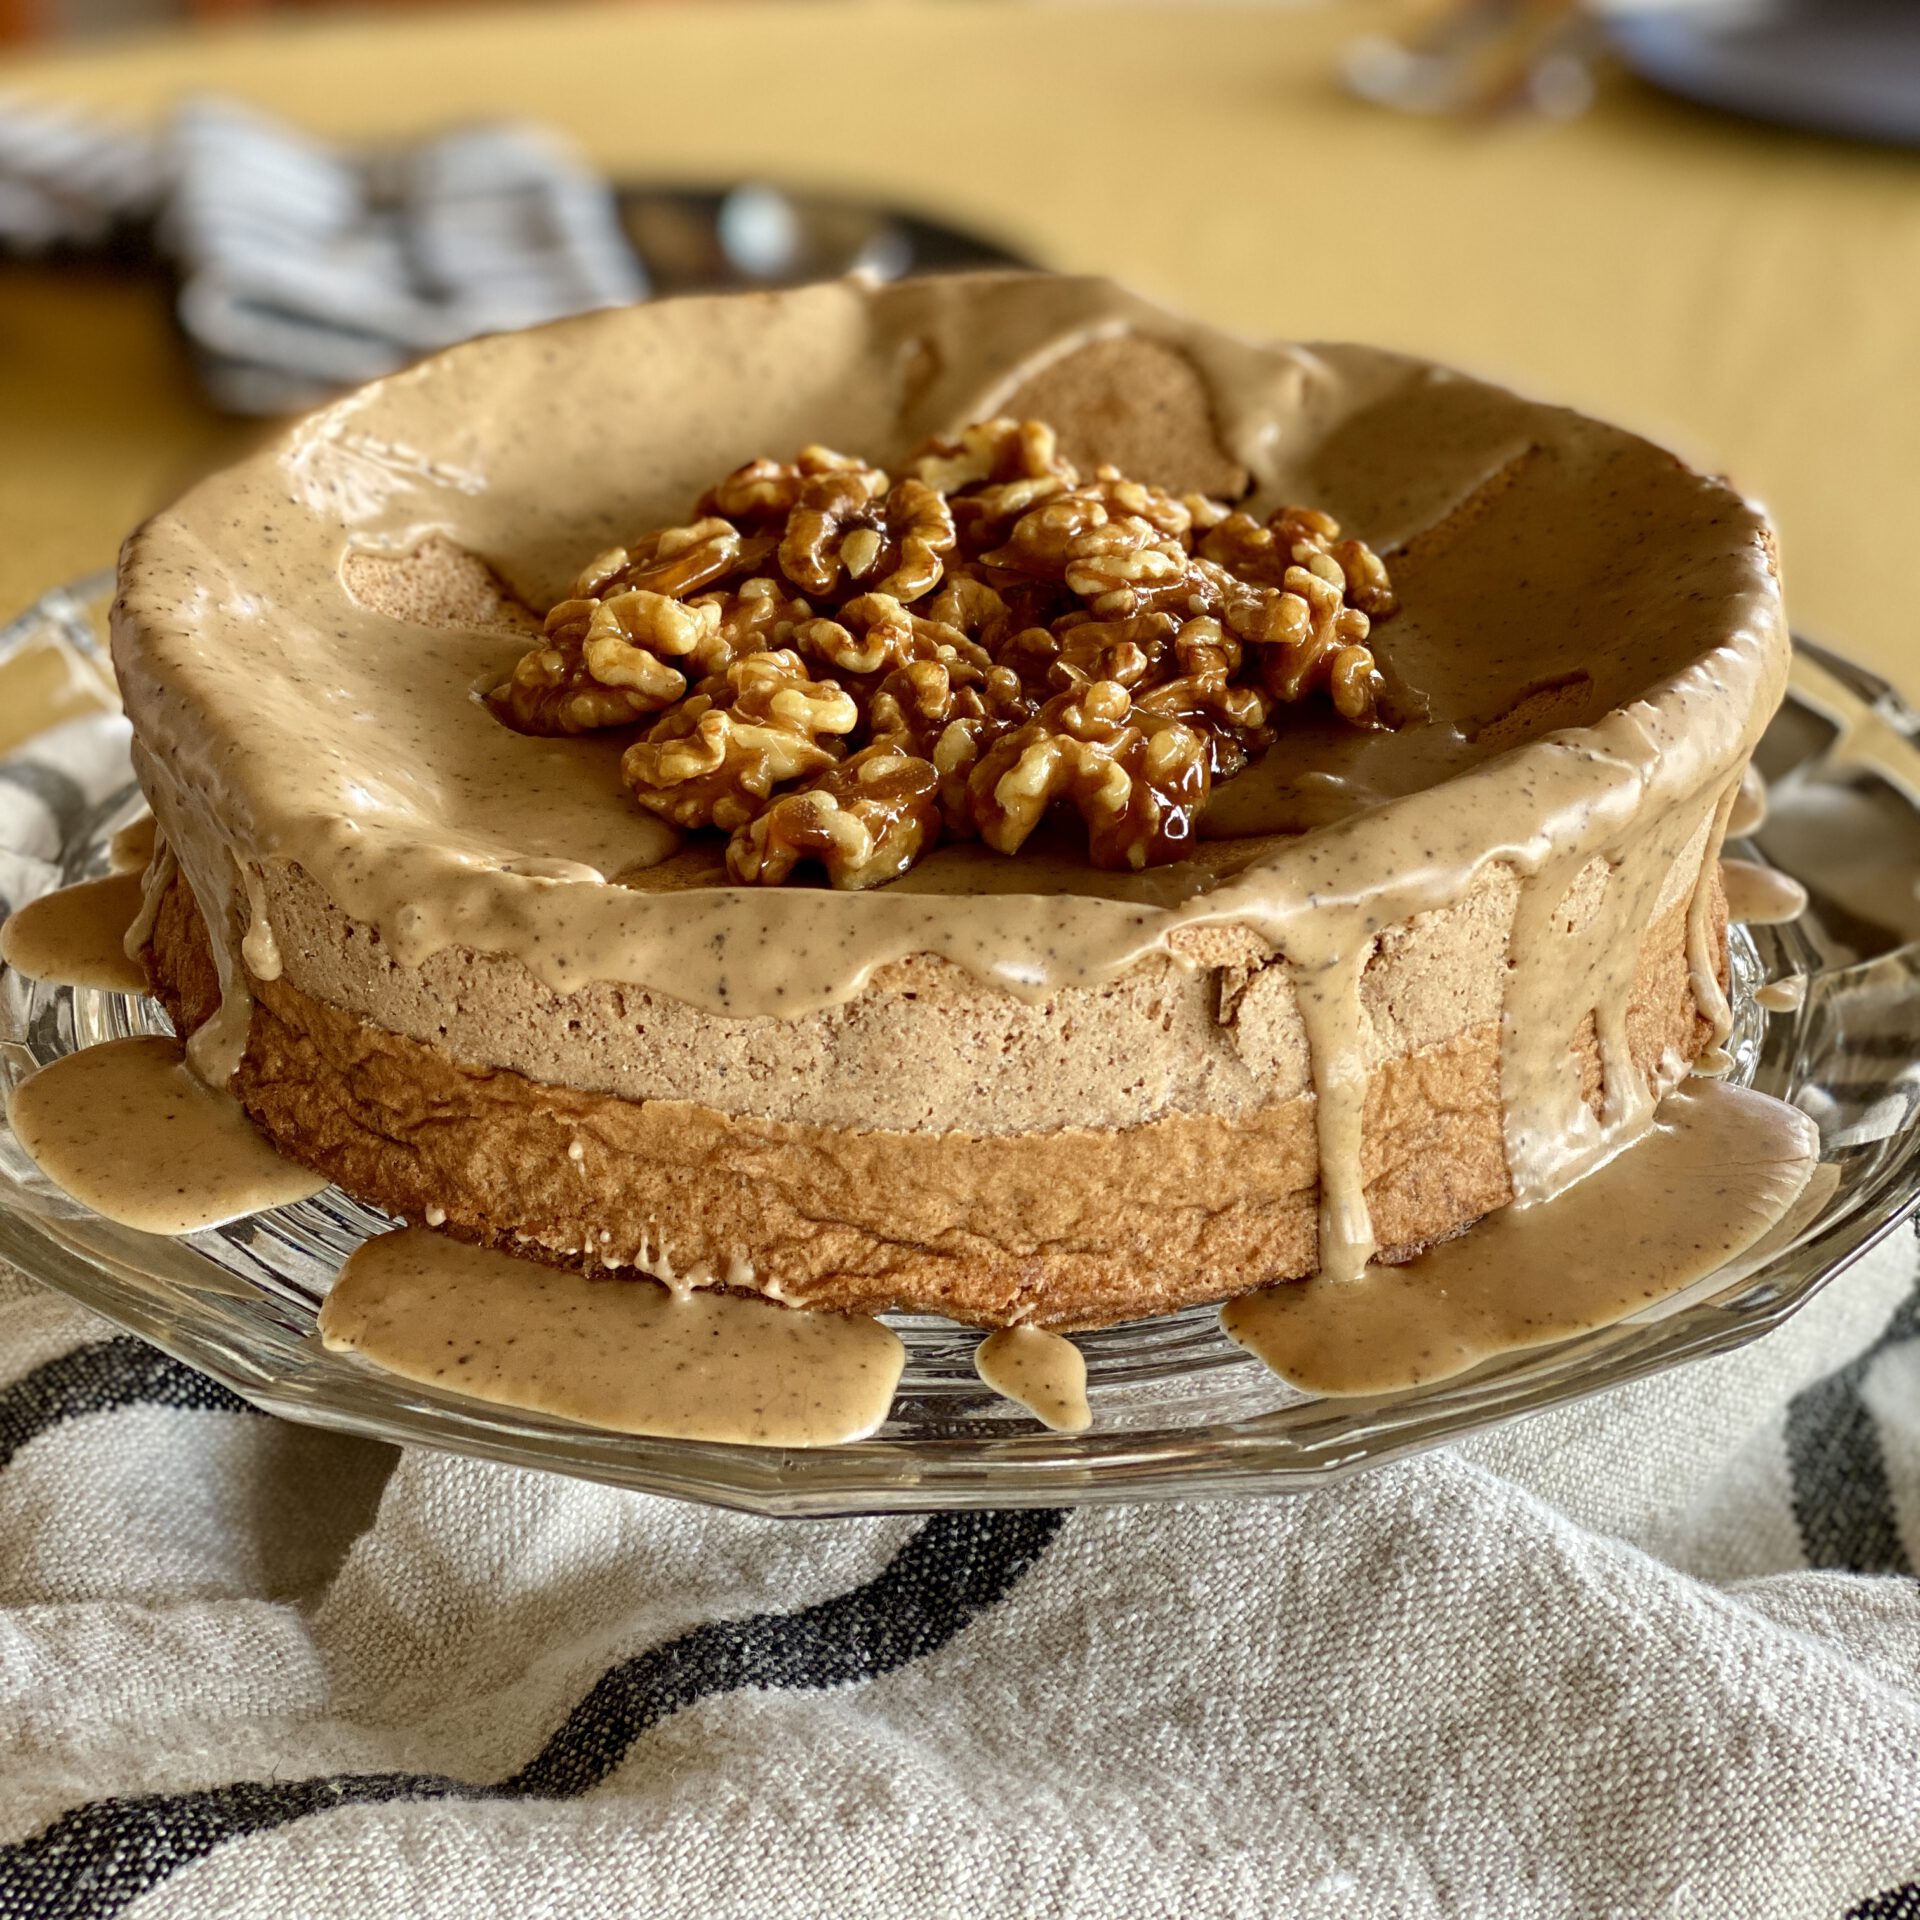 Flourless walnut cake on a cake platter.